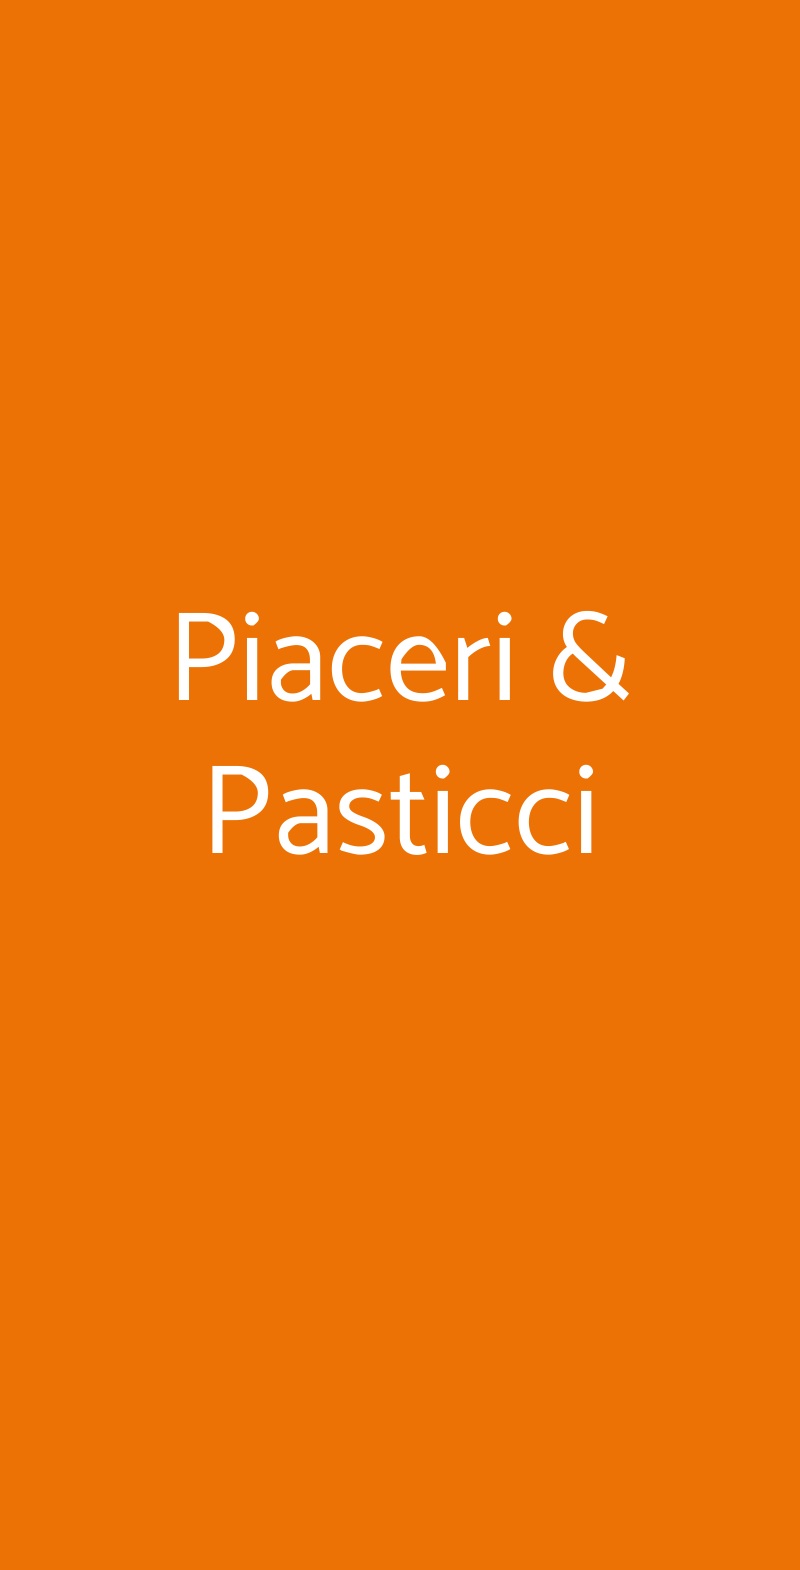 Piaceri & Pasticci Parabiago menù 1 pagina